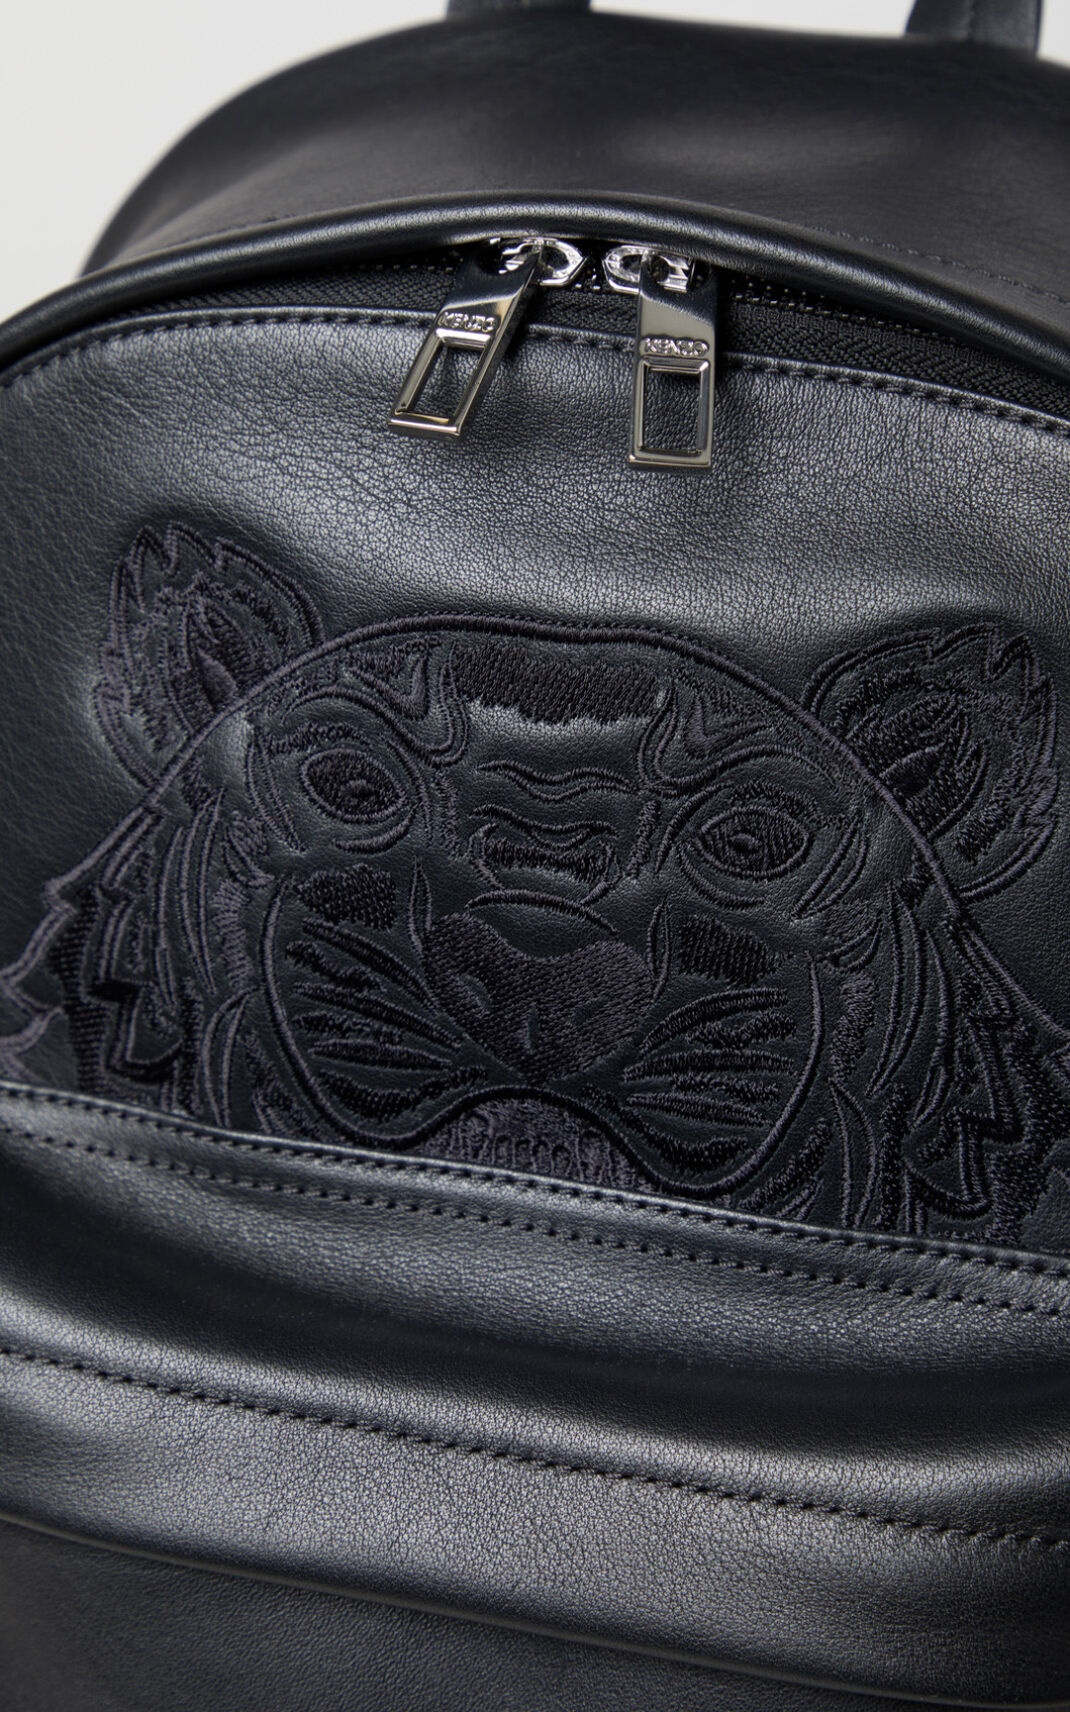 Tiger leather backpack - 4